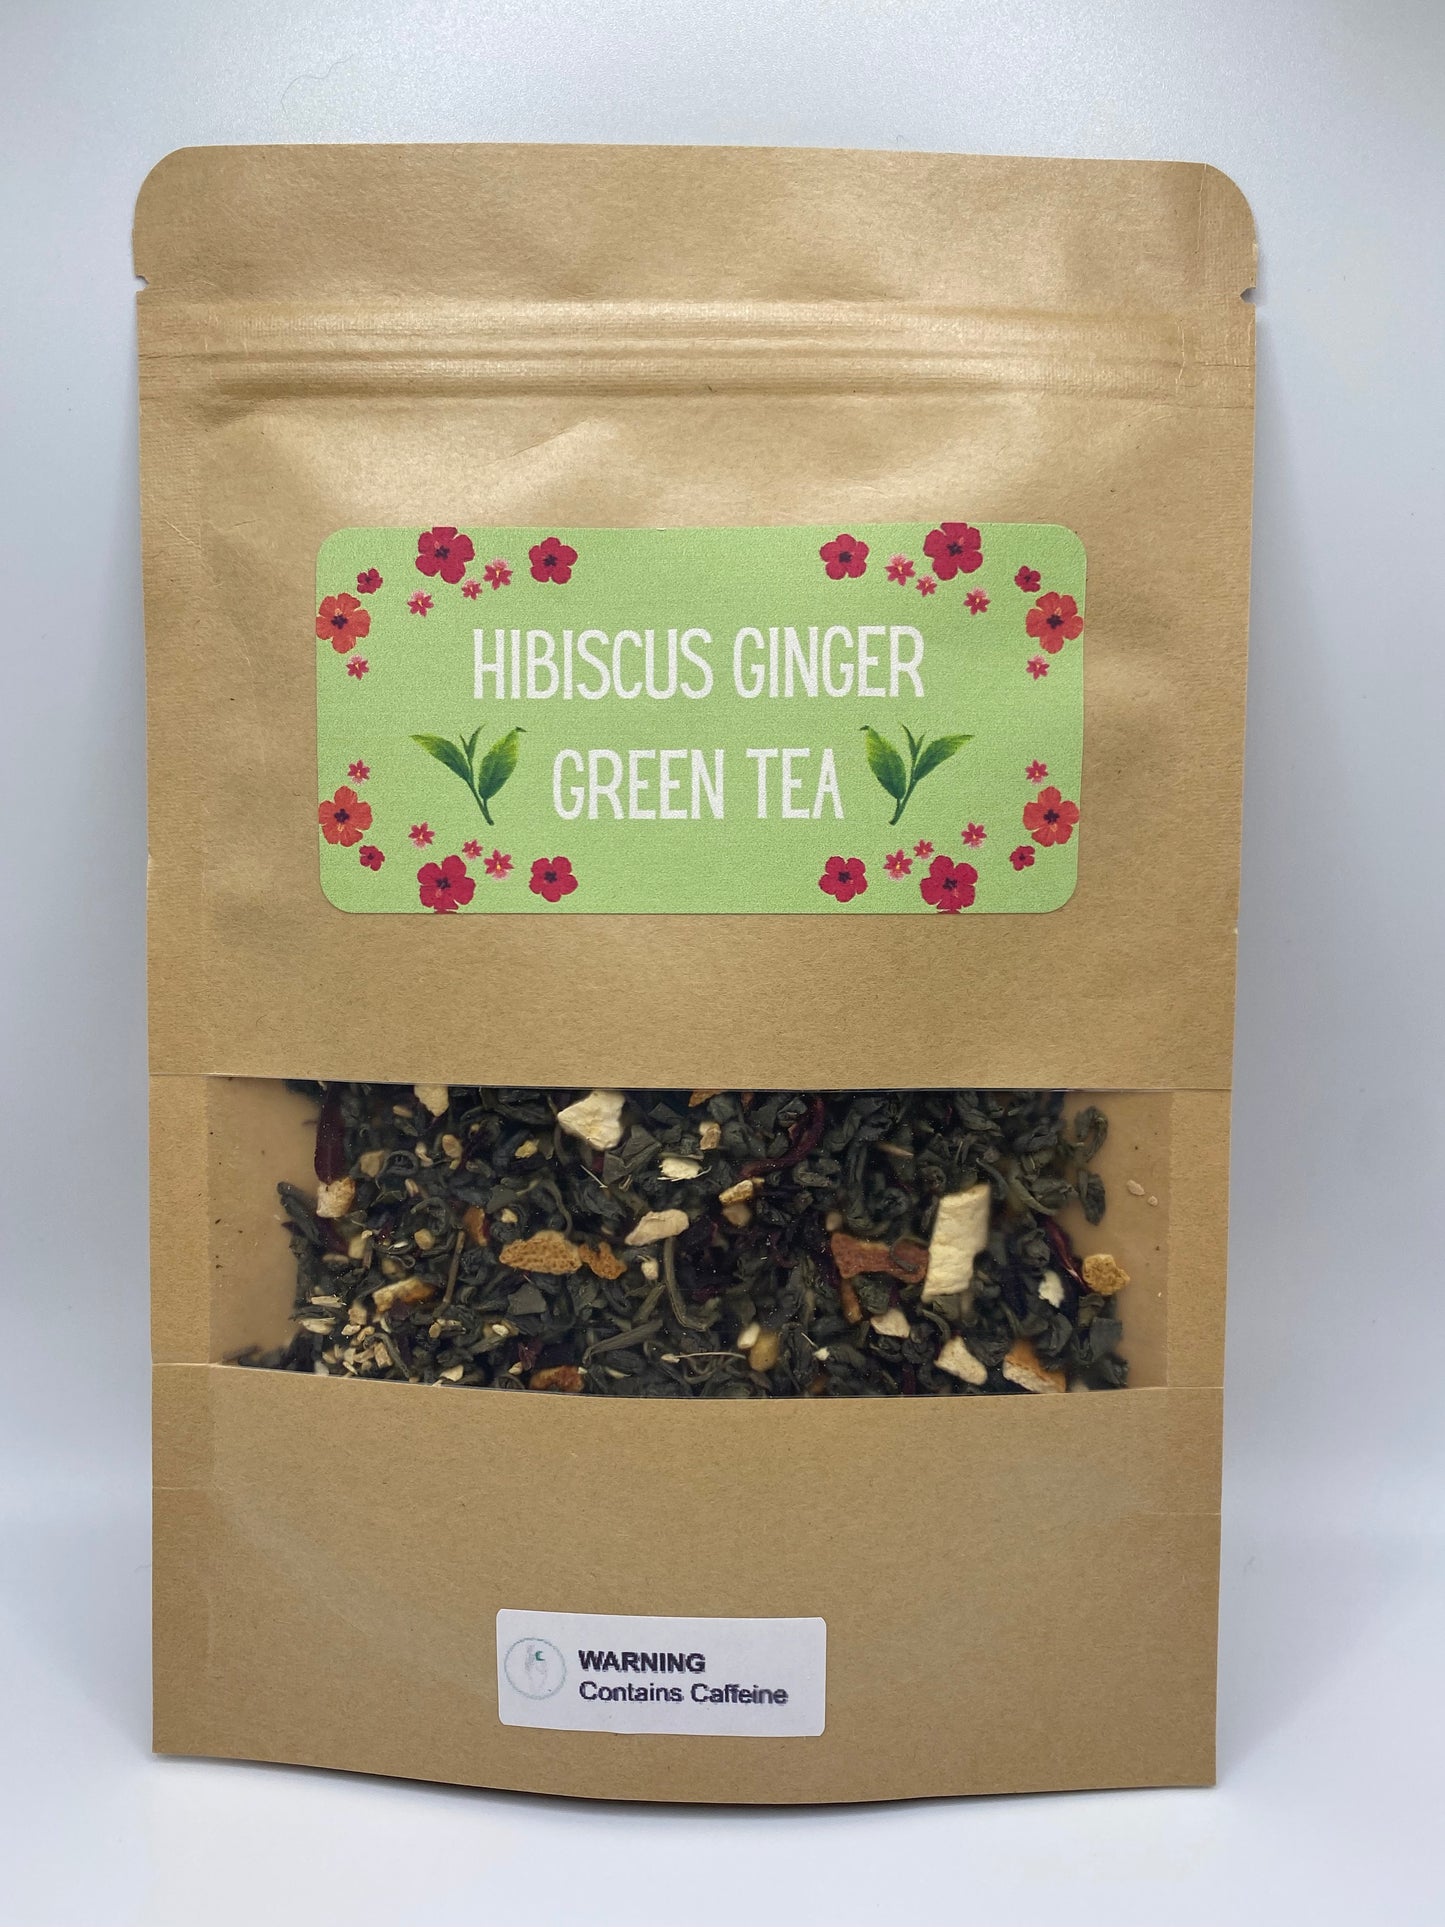 Hibiscus Ginger Green Tea